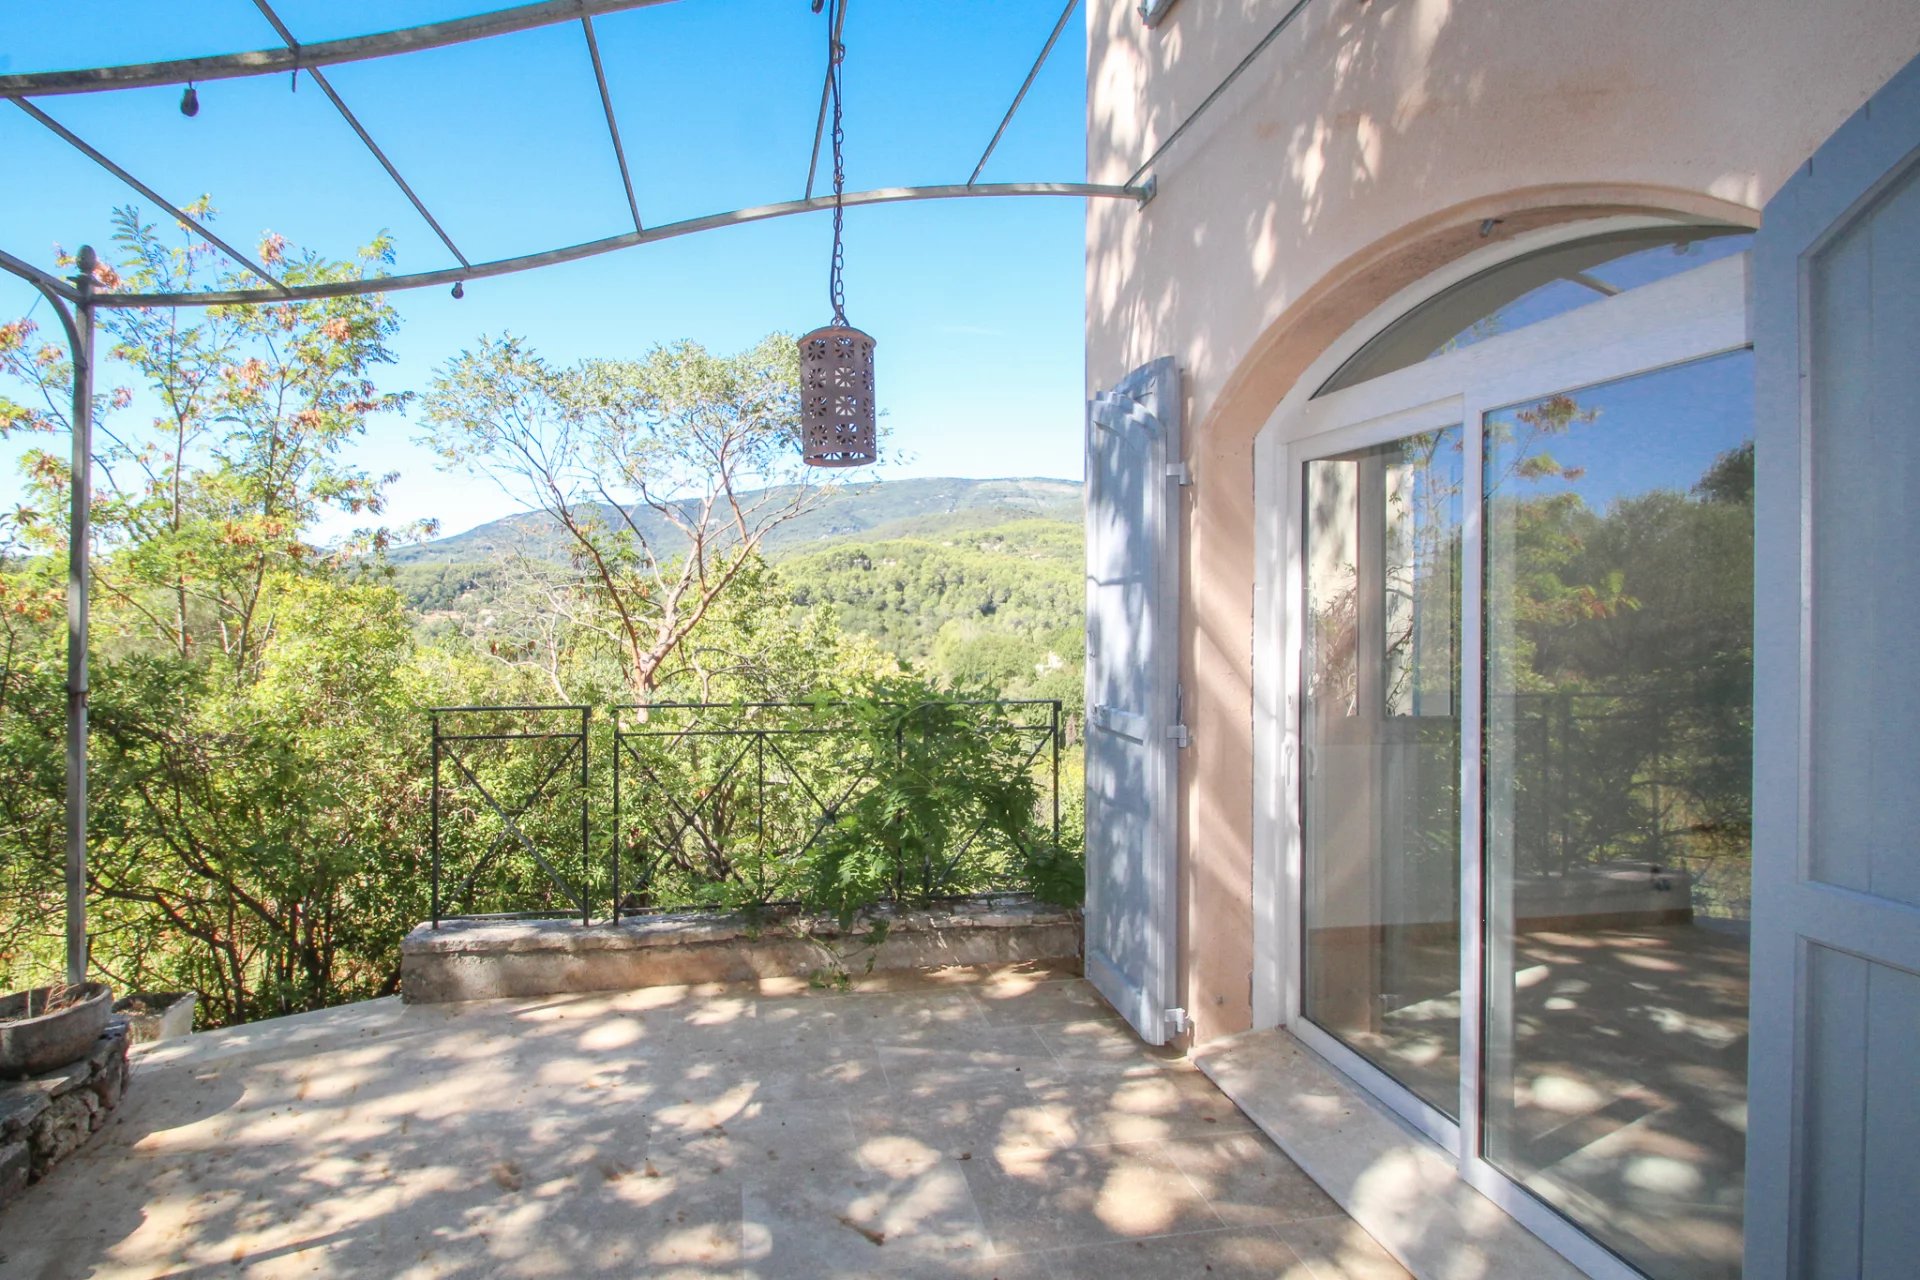 Fayence Provence pittoresque villa dans evironnement champetre